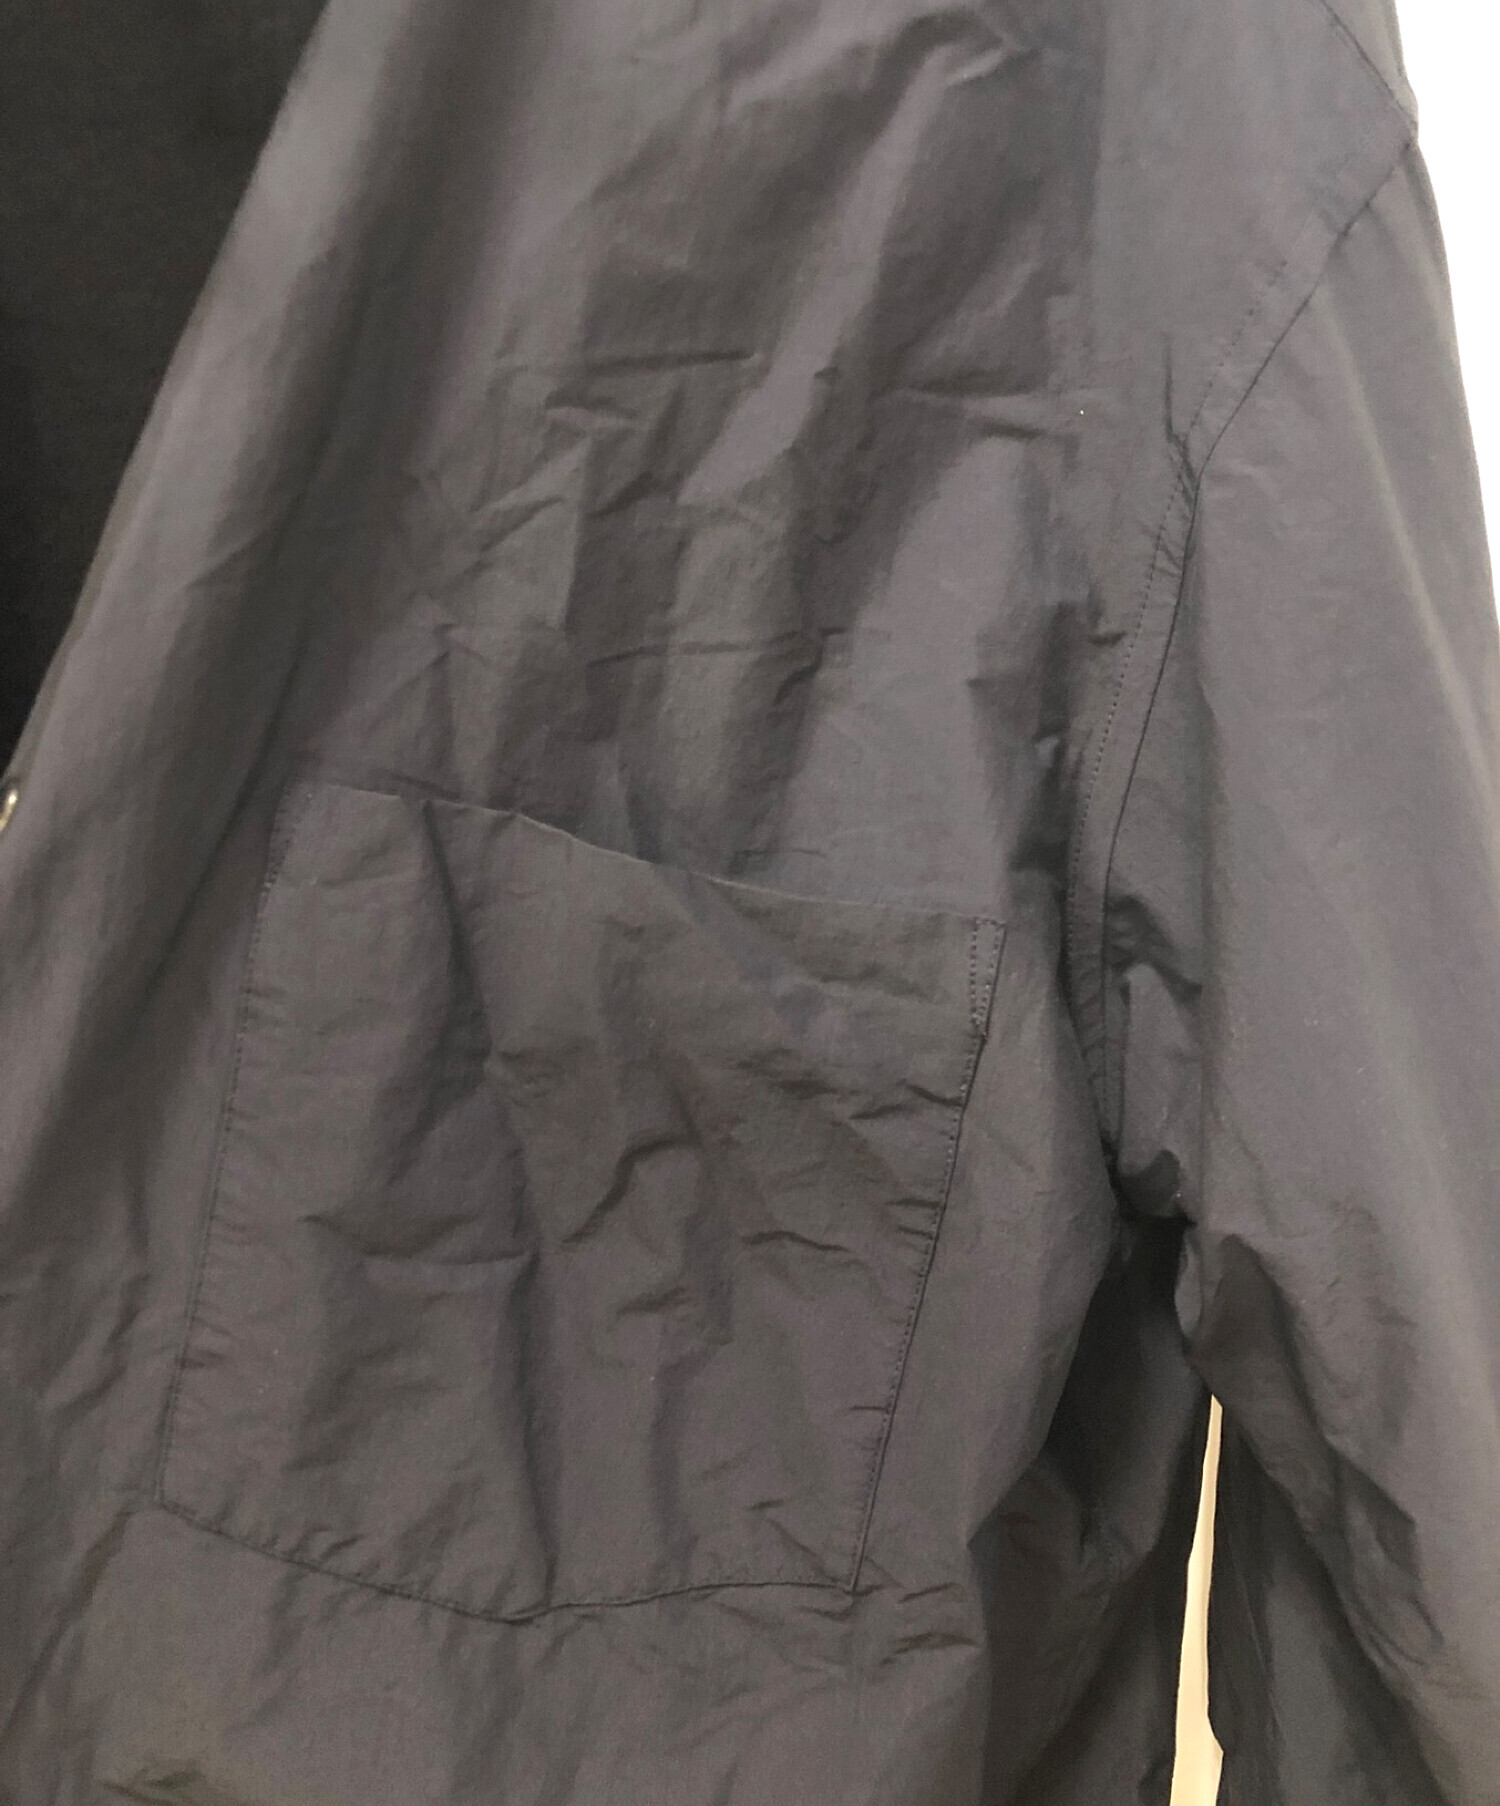 COMOLI (コモリ) ナイロンシャツジャケット ネイビー サイズ:2